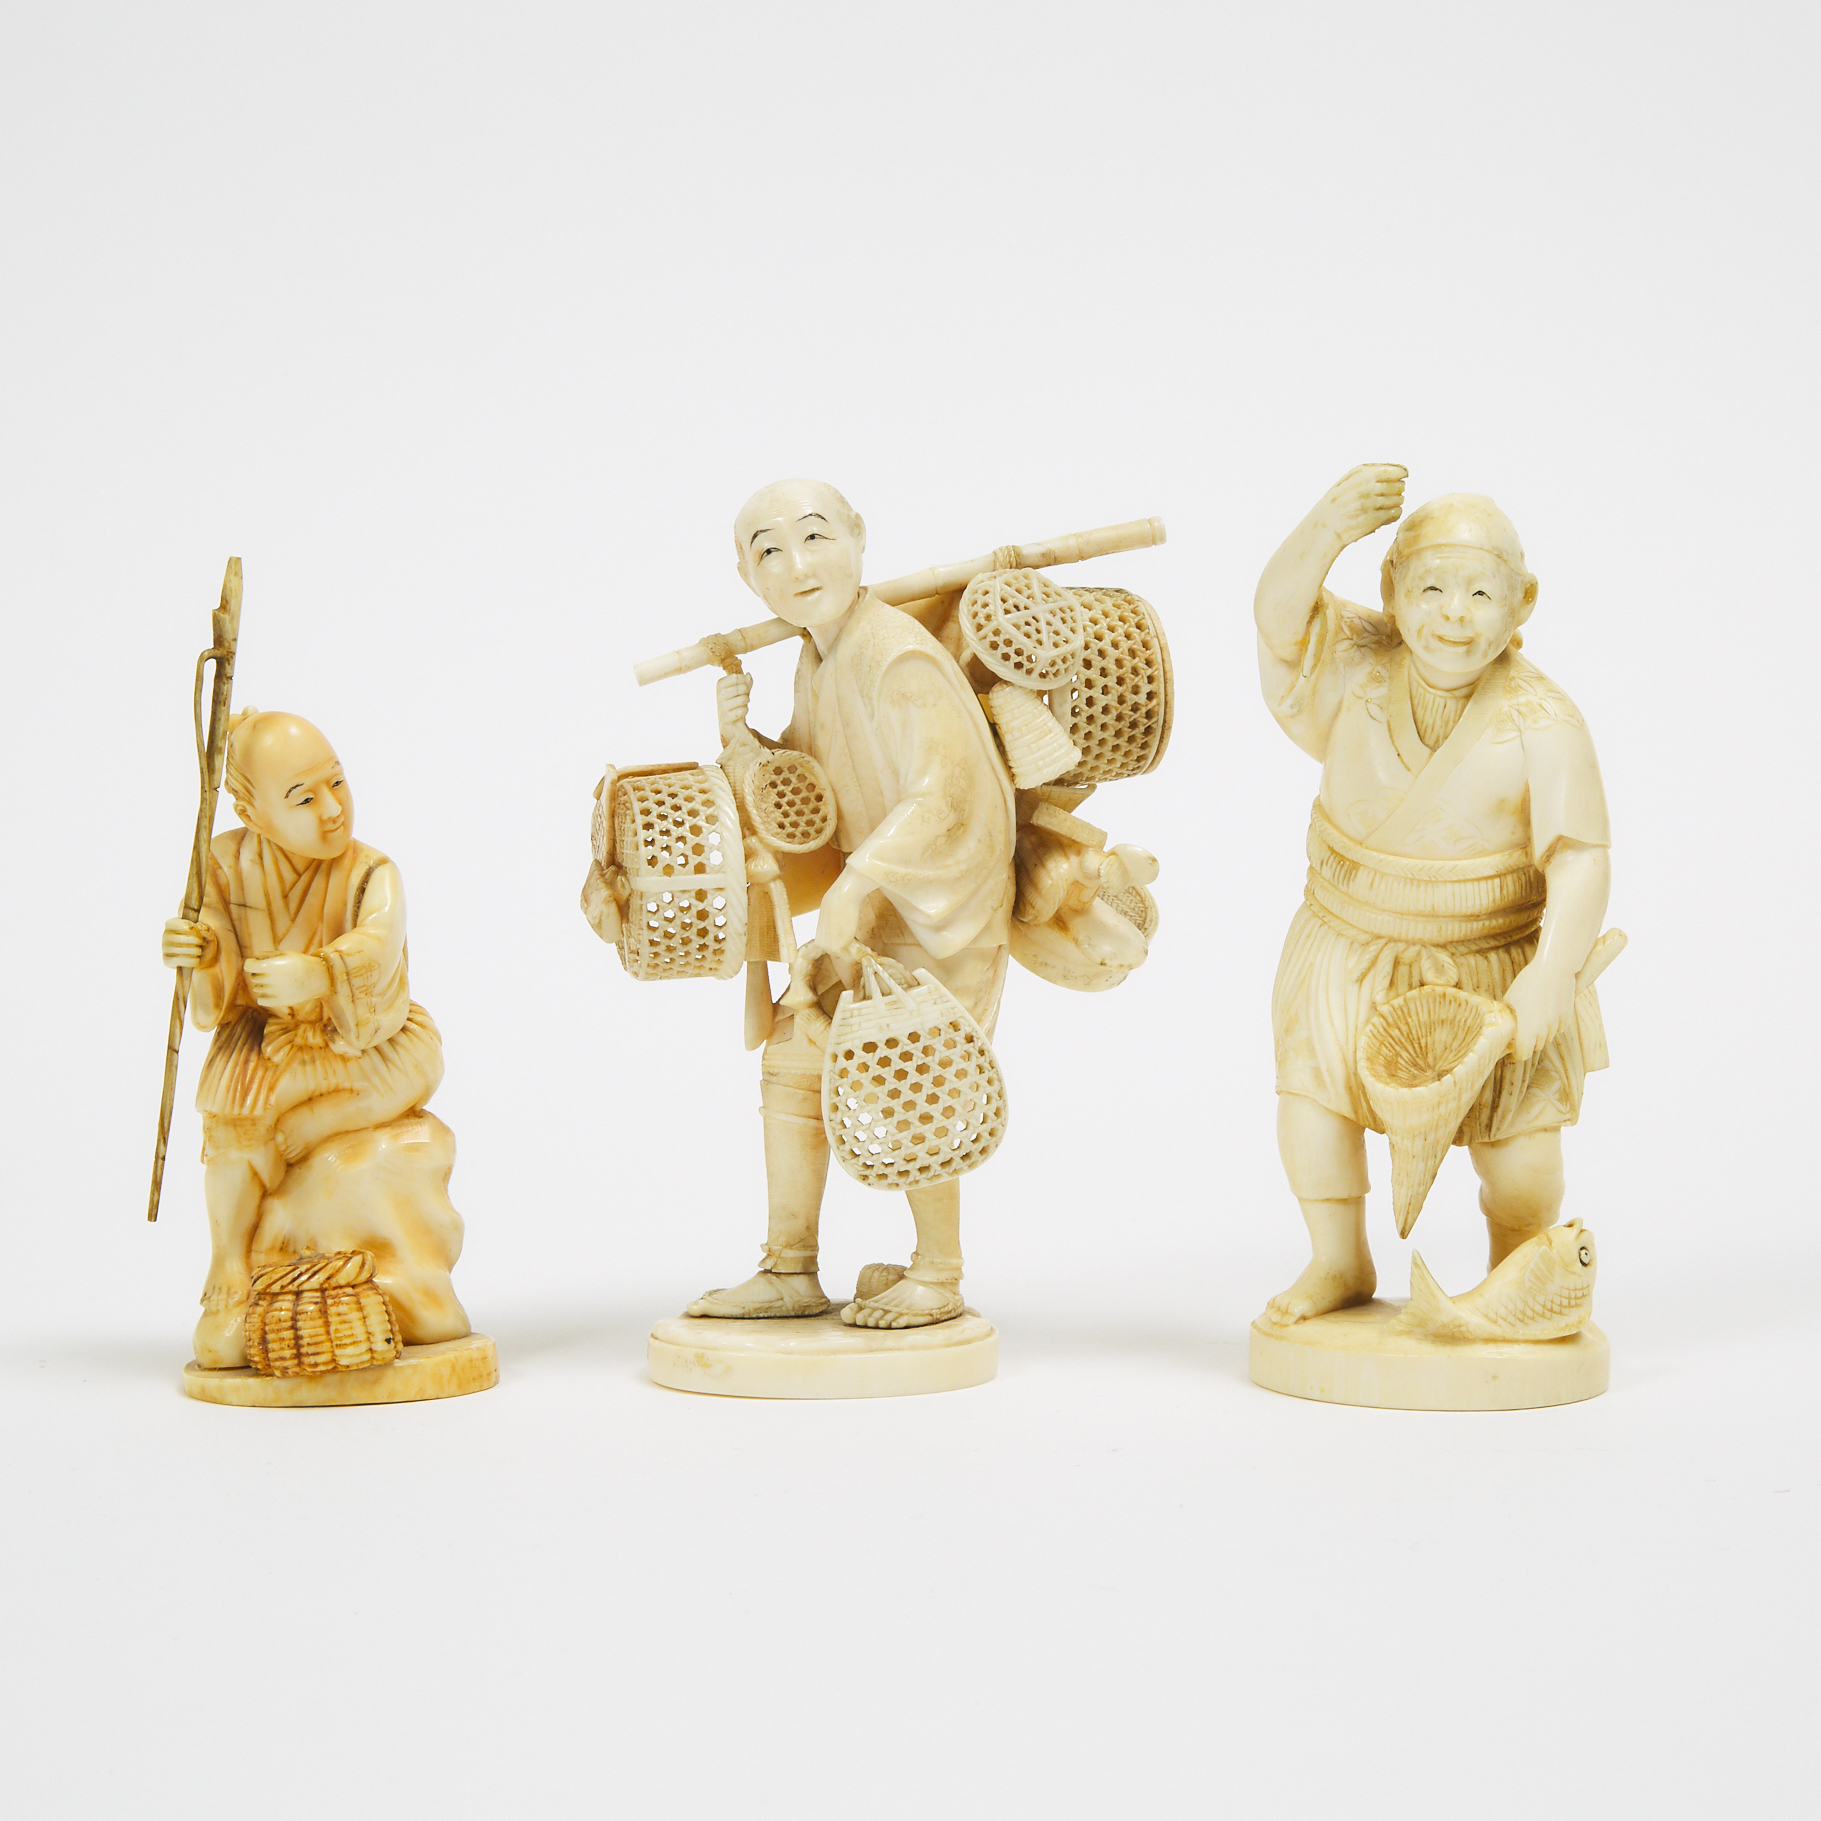 A Group of Three Ivory Okimono of Fishermen and a Merchant, Meiji Period